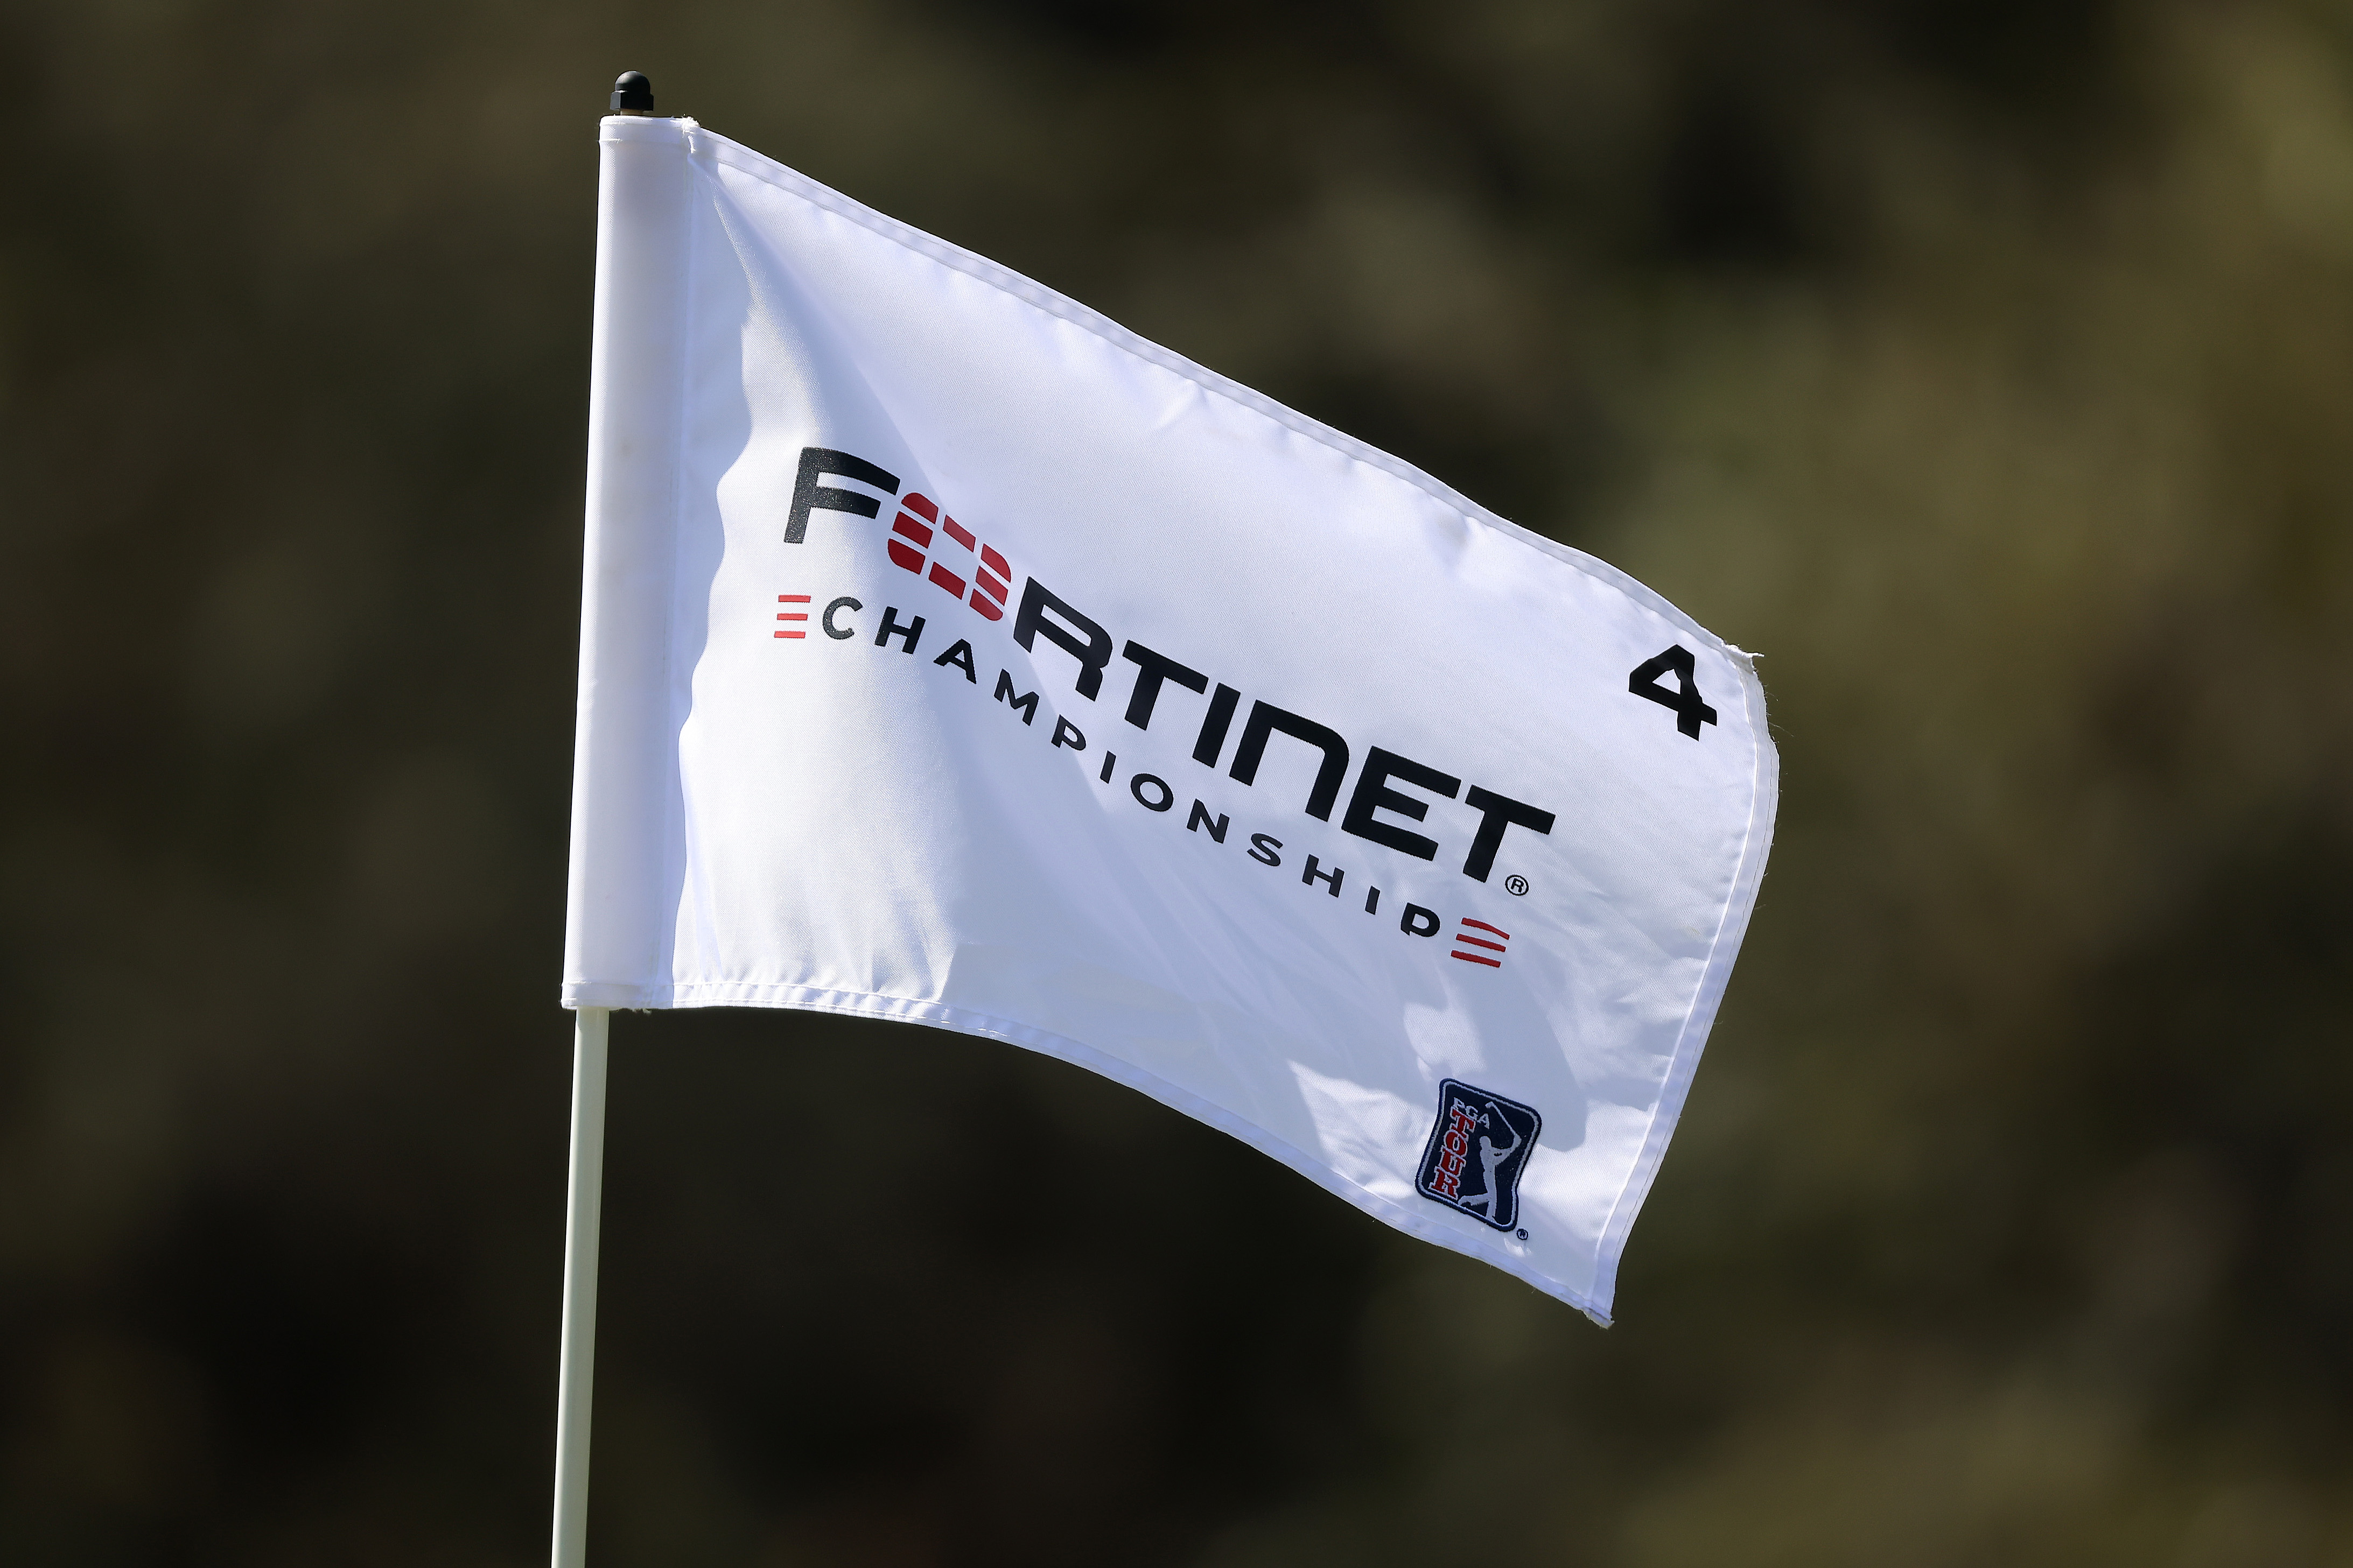 Fortinet Australian PGA Championship Prize Money Payout 2023